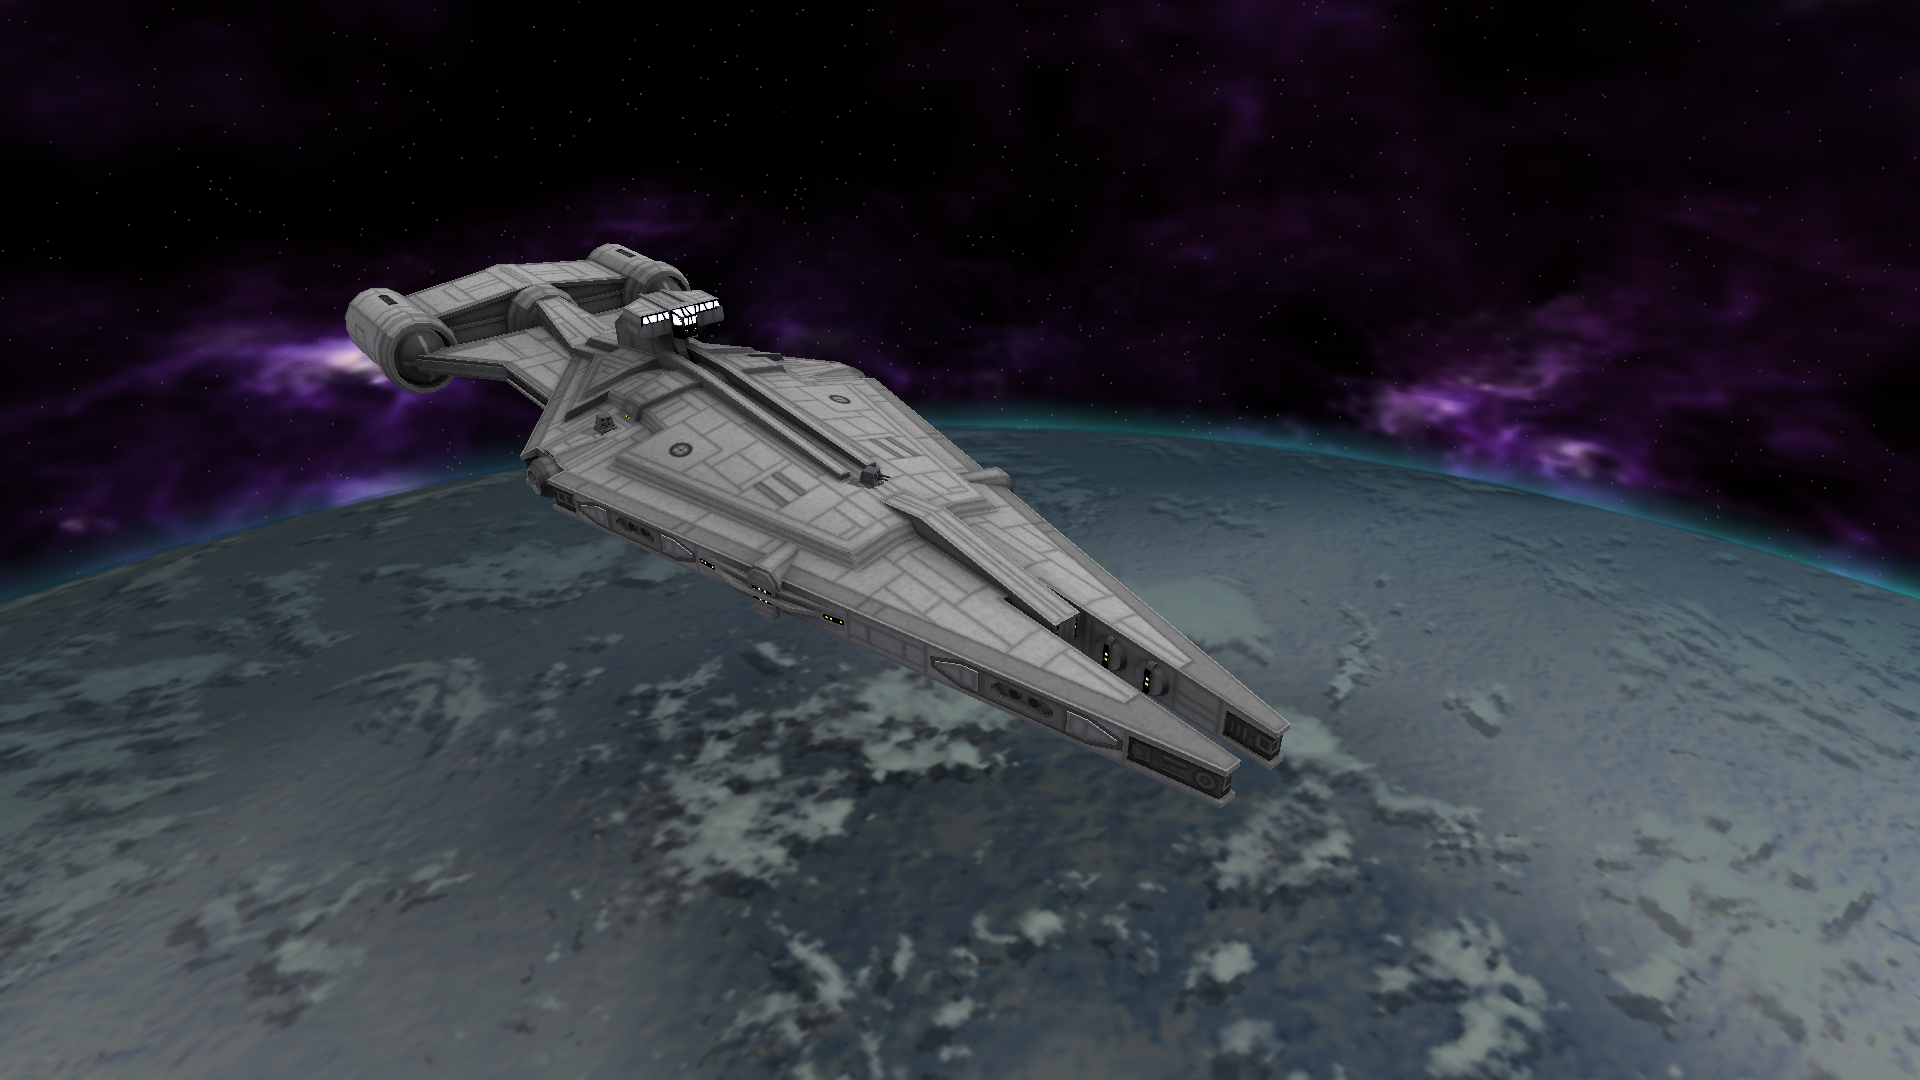 Imperial Light Cruiser orbiting Hoth image Era Mod for Star Wars Battlefront II